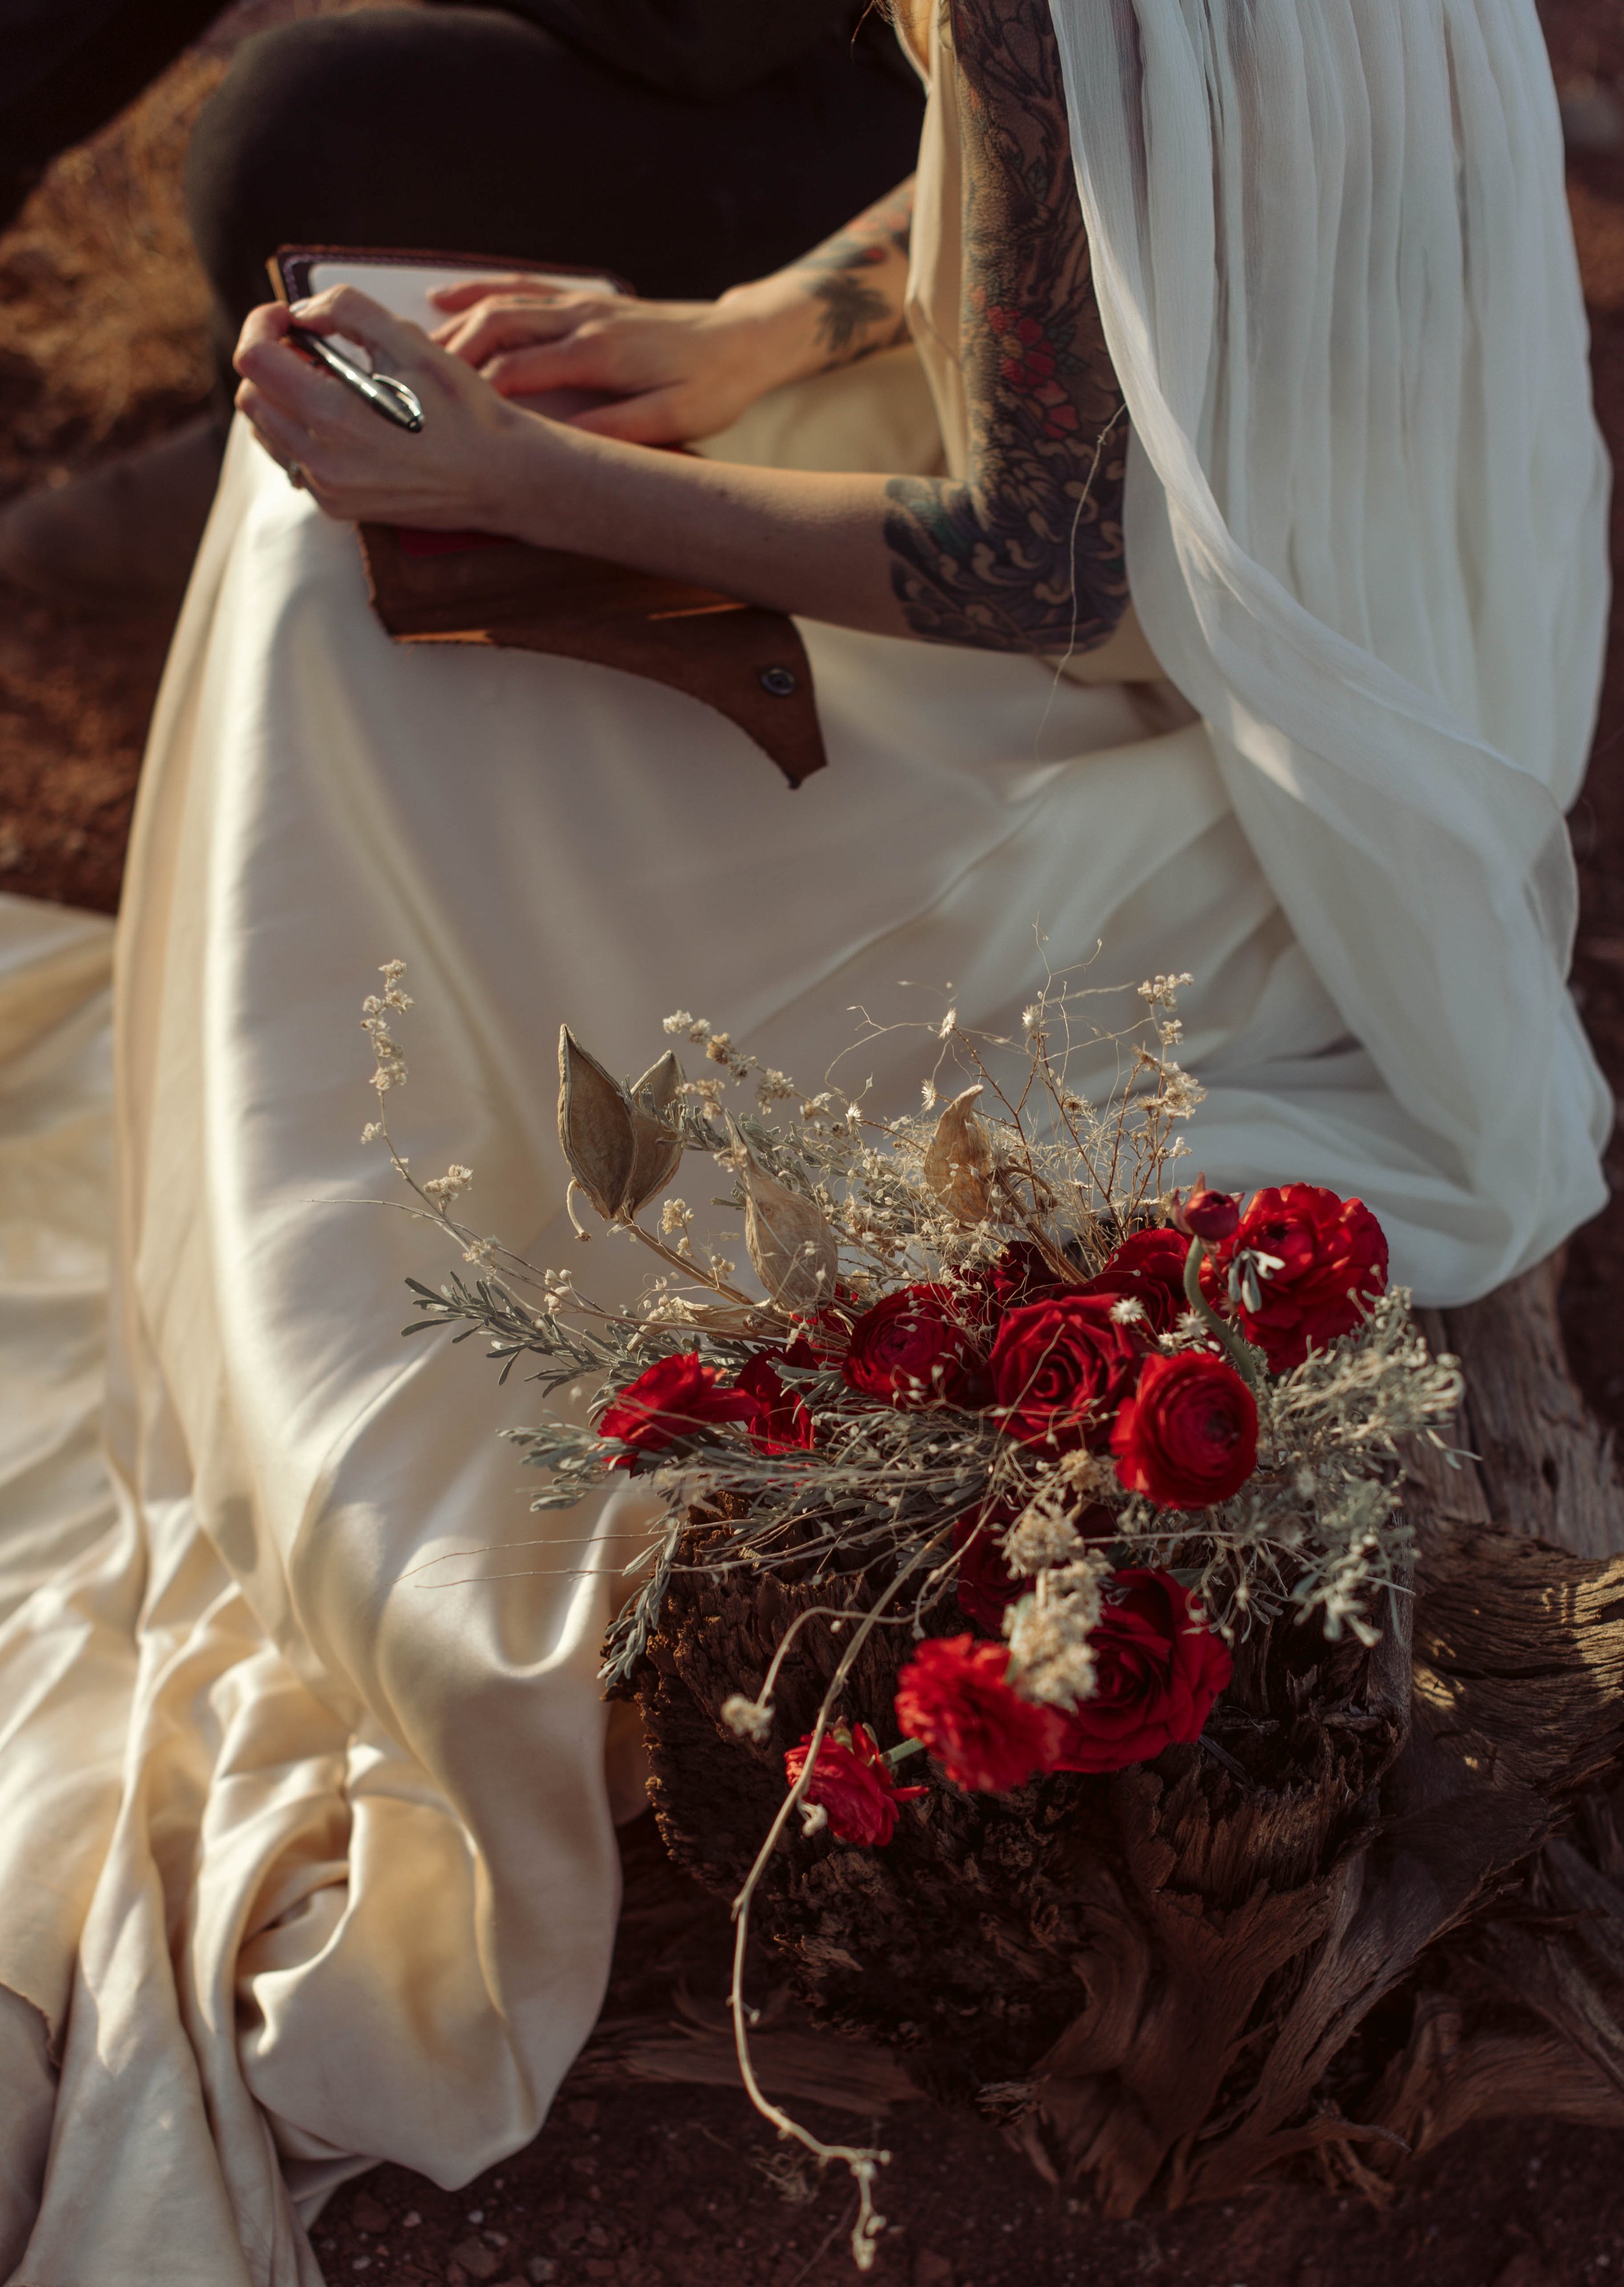  utah desert elopement wedding dress 